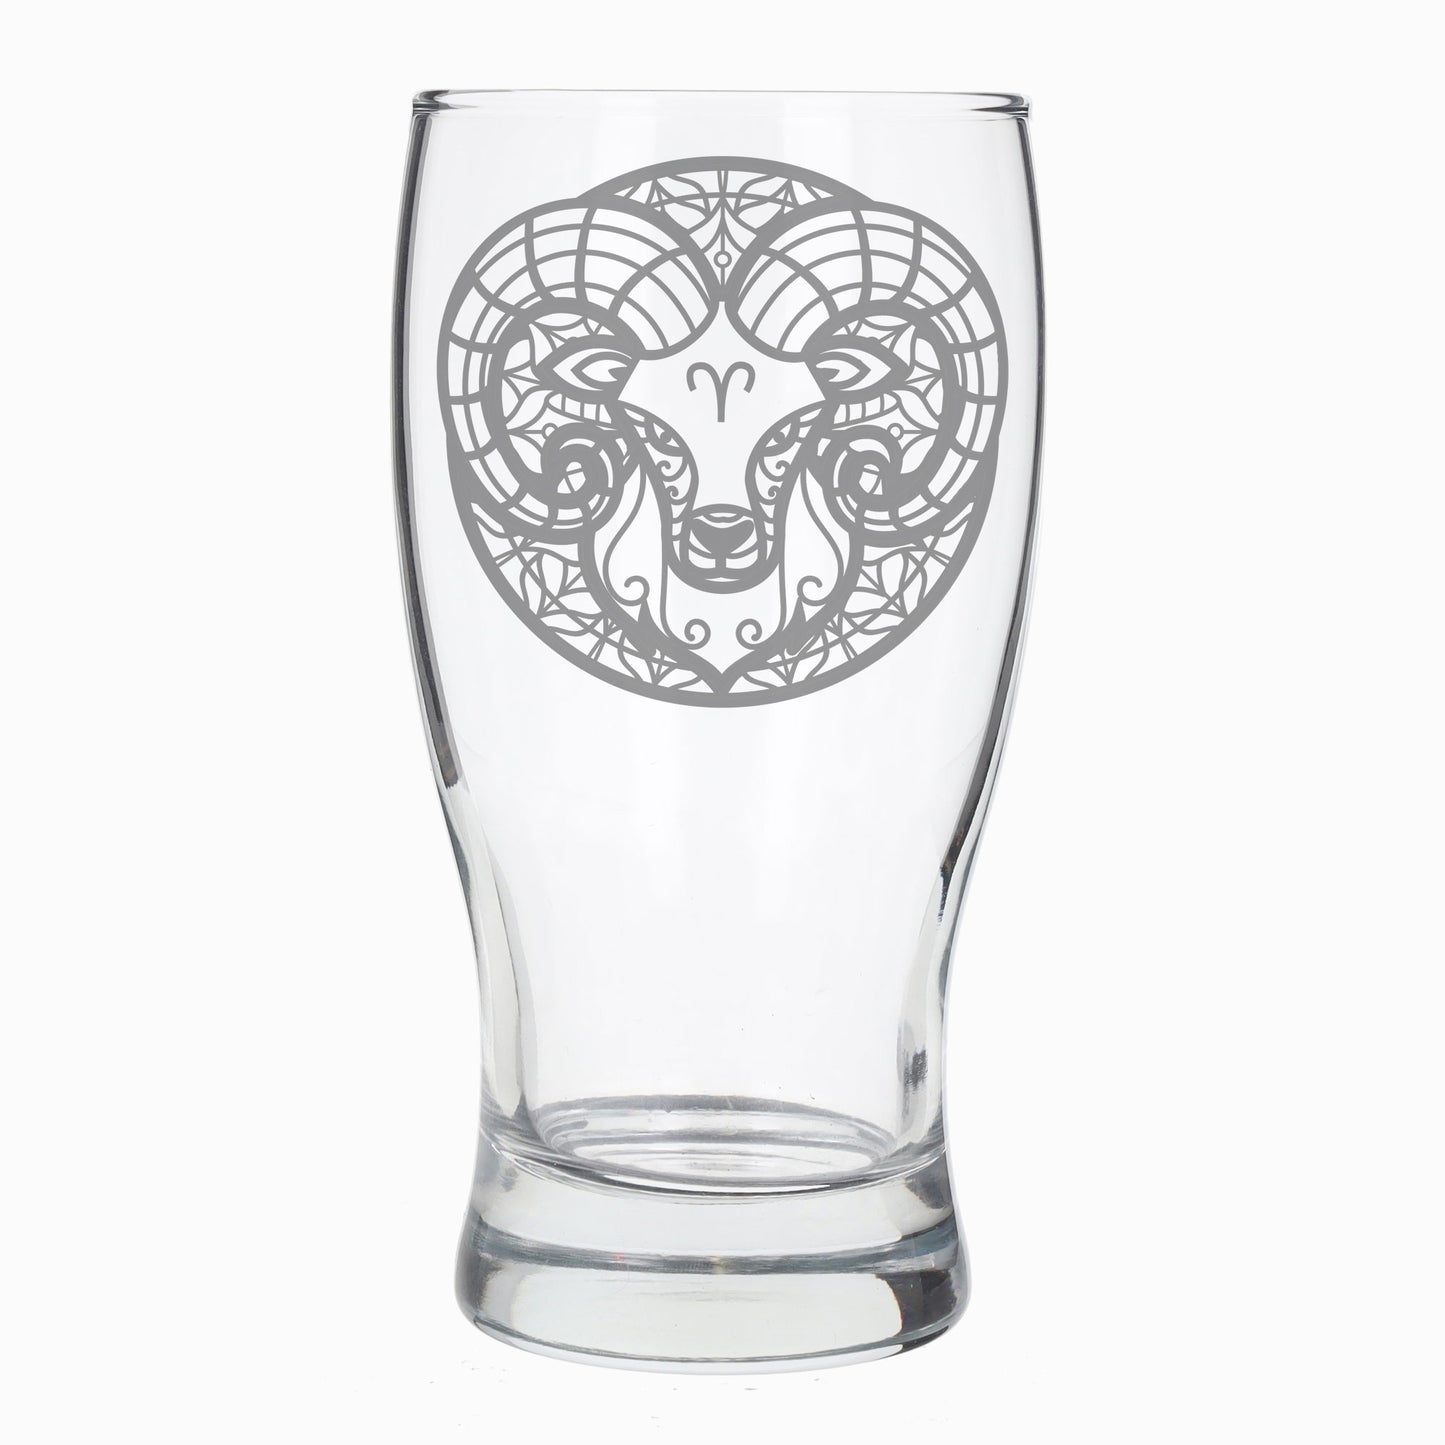 Aries Zodiac Engraved Pint Glass  - Always Looking Good -   